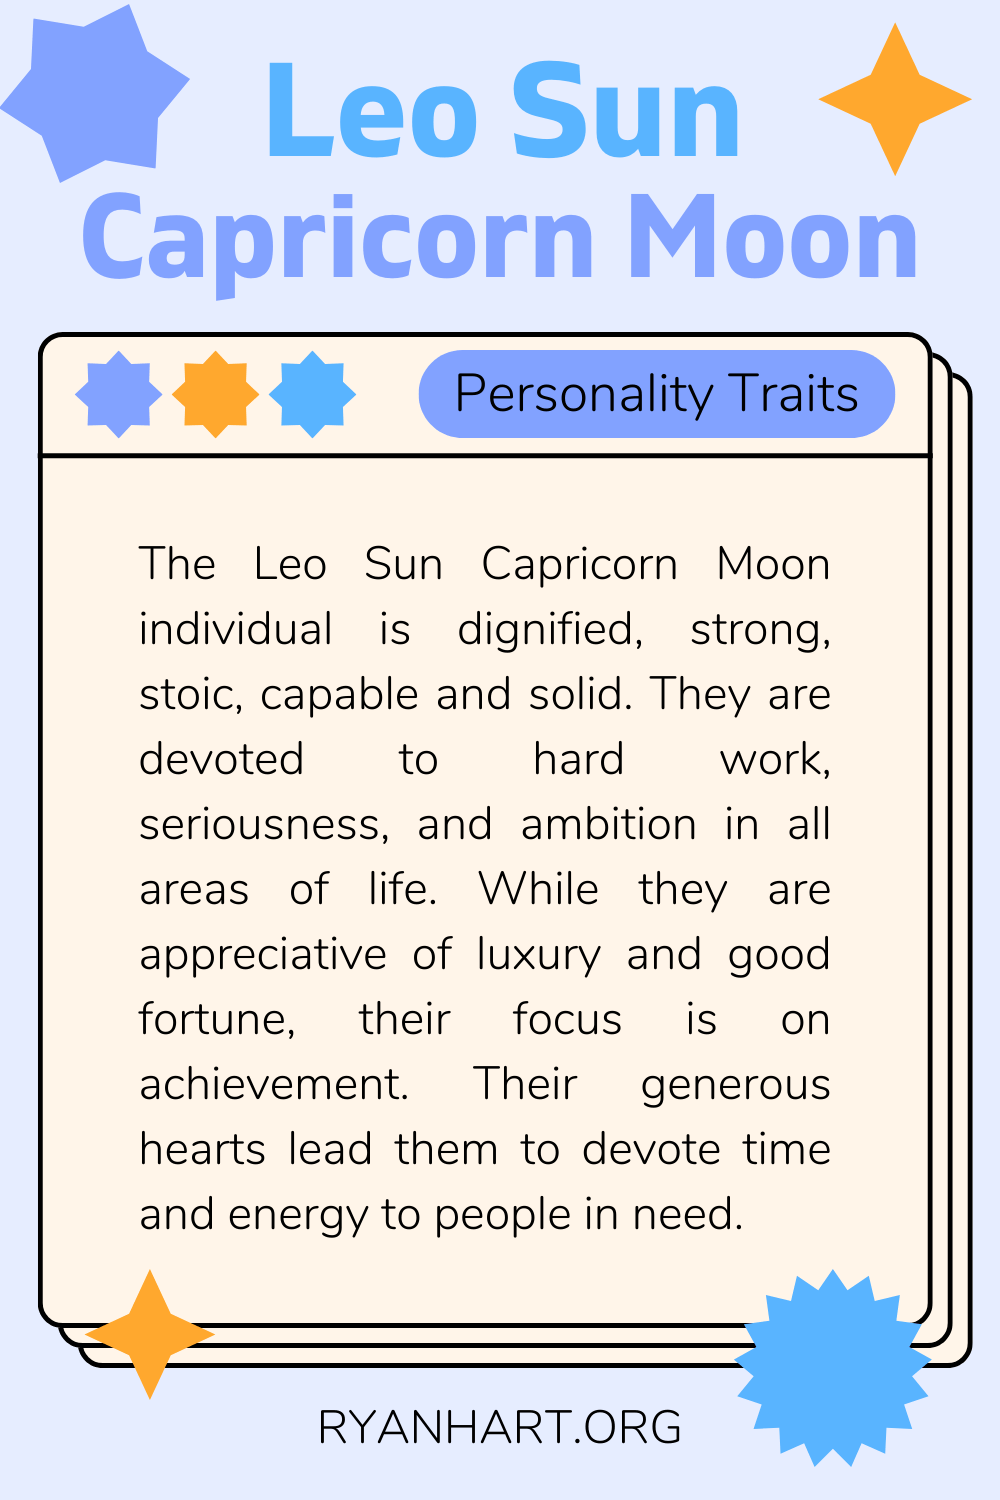 Leo Sun Capricorn Moon Description